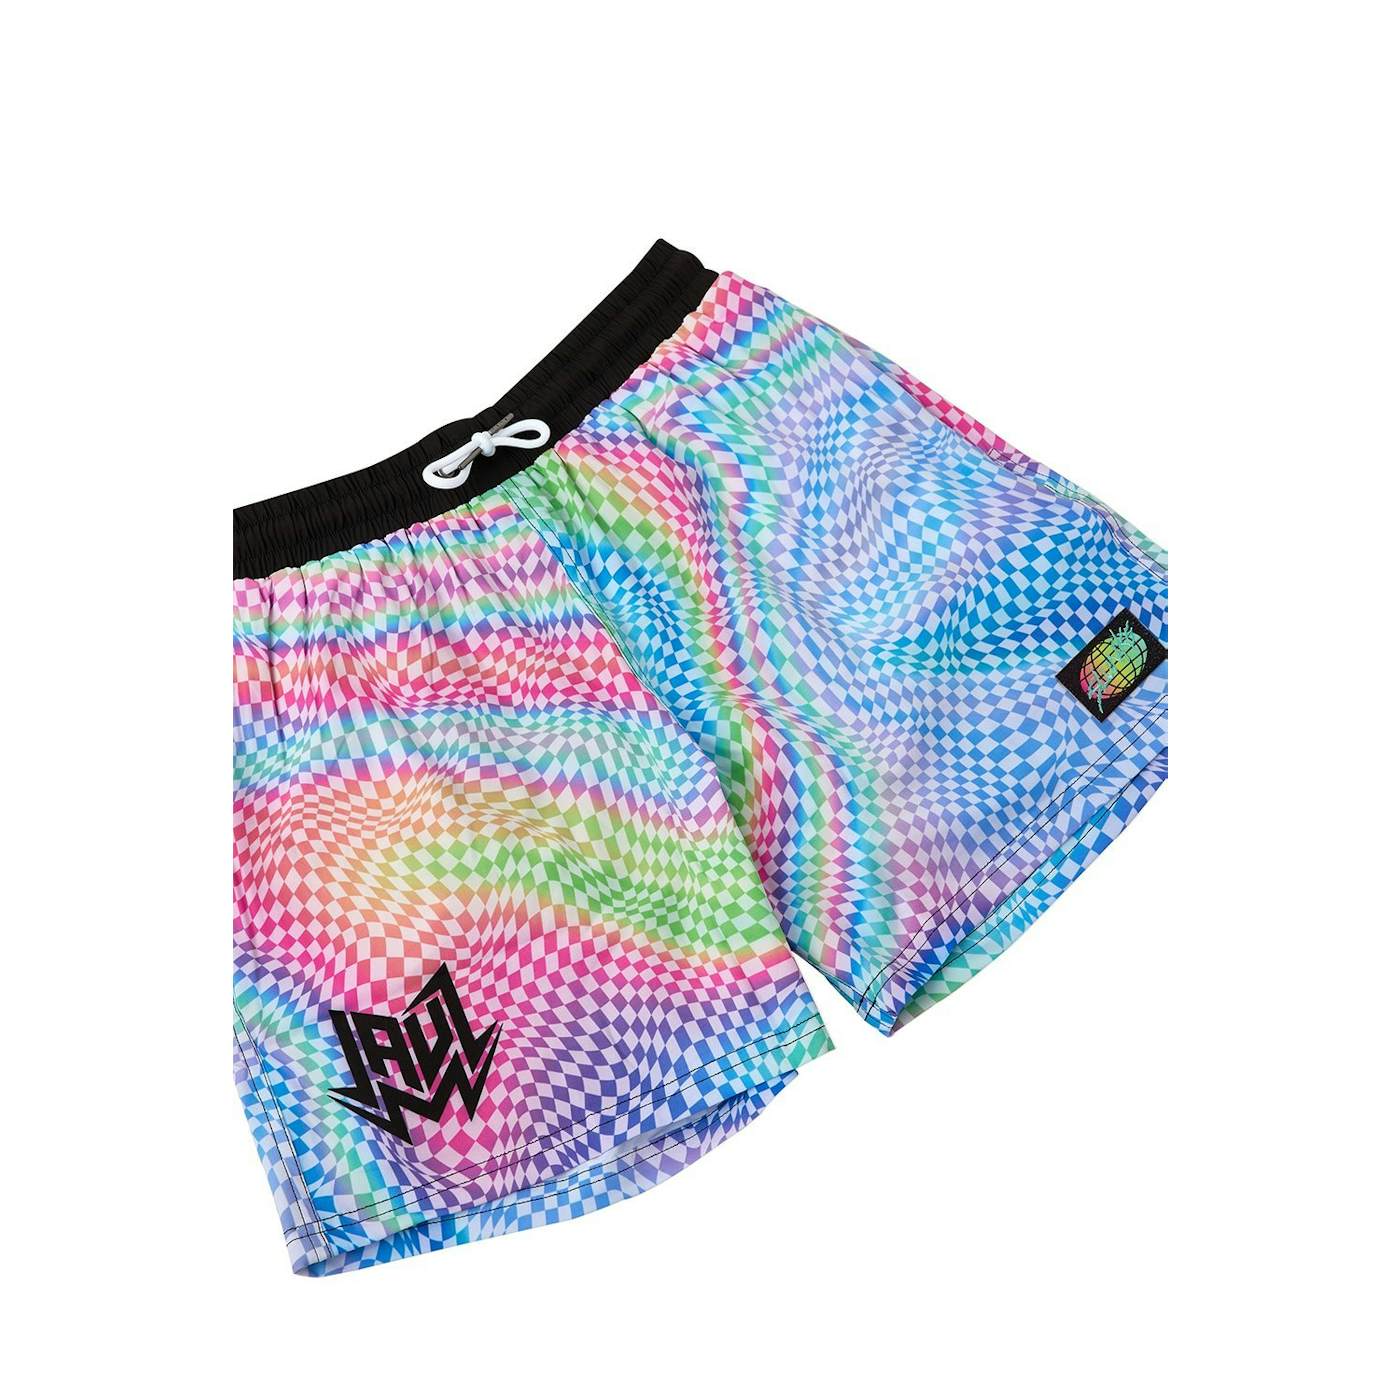 Jauz Checkered Slunks Board Shorts (Rainbow)